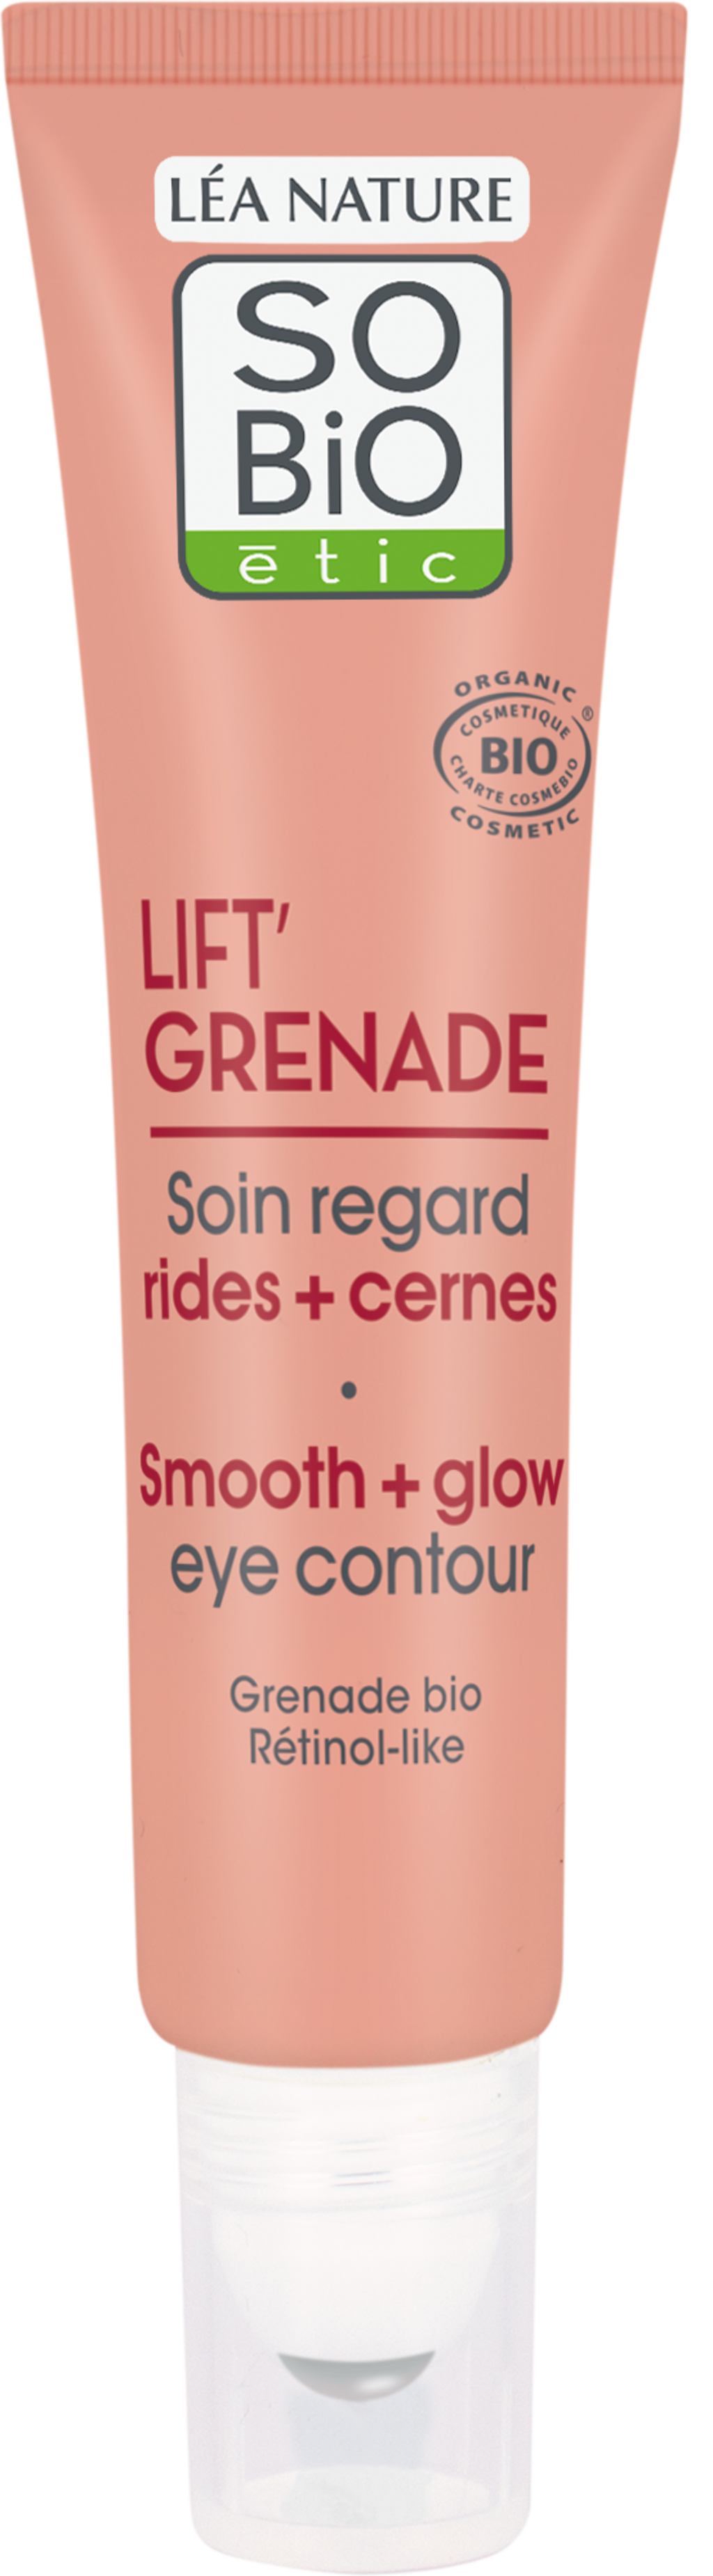 LÉA NATURE SO BiO étic Lift'Grenade Smooth + Glow Eye Contour Gel